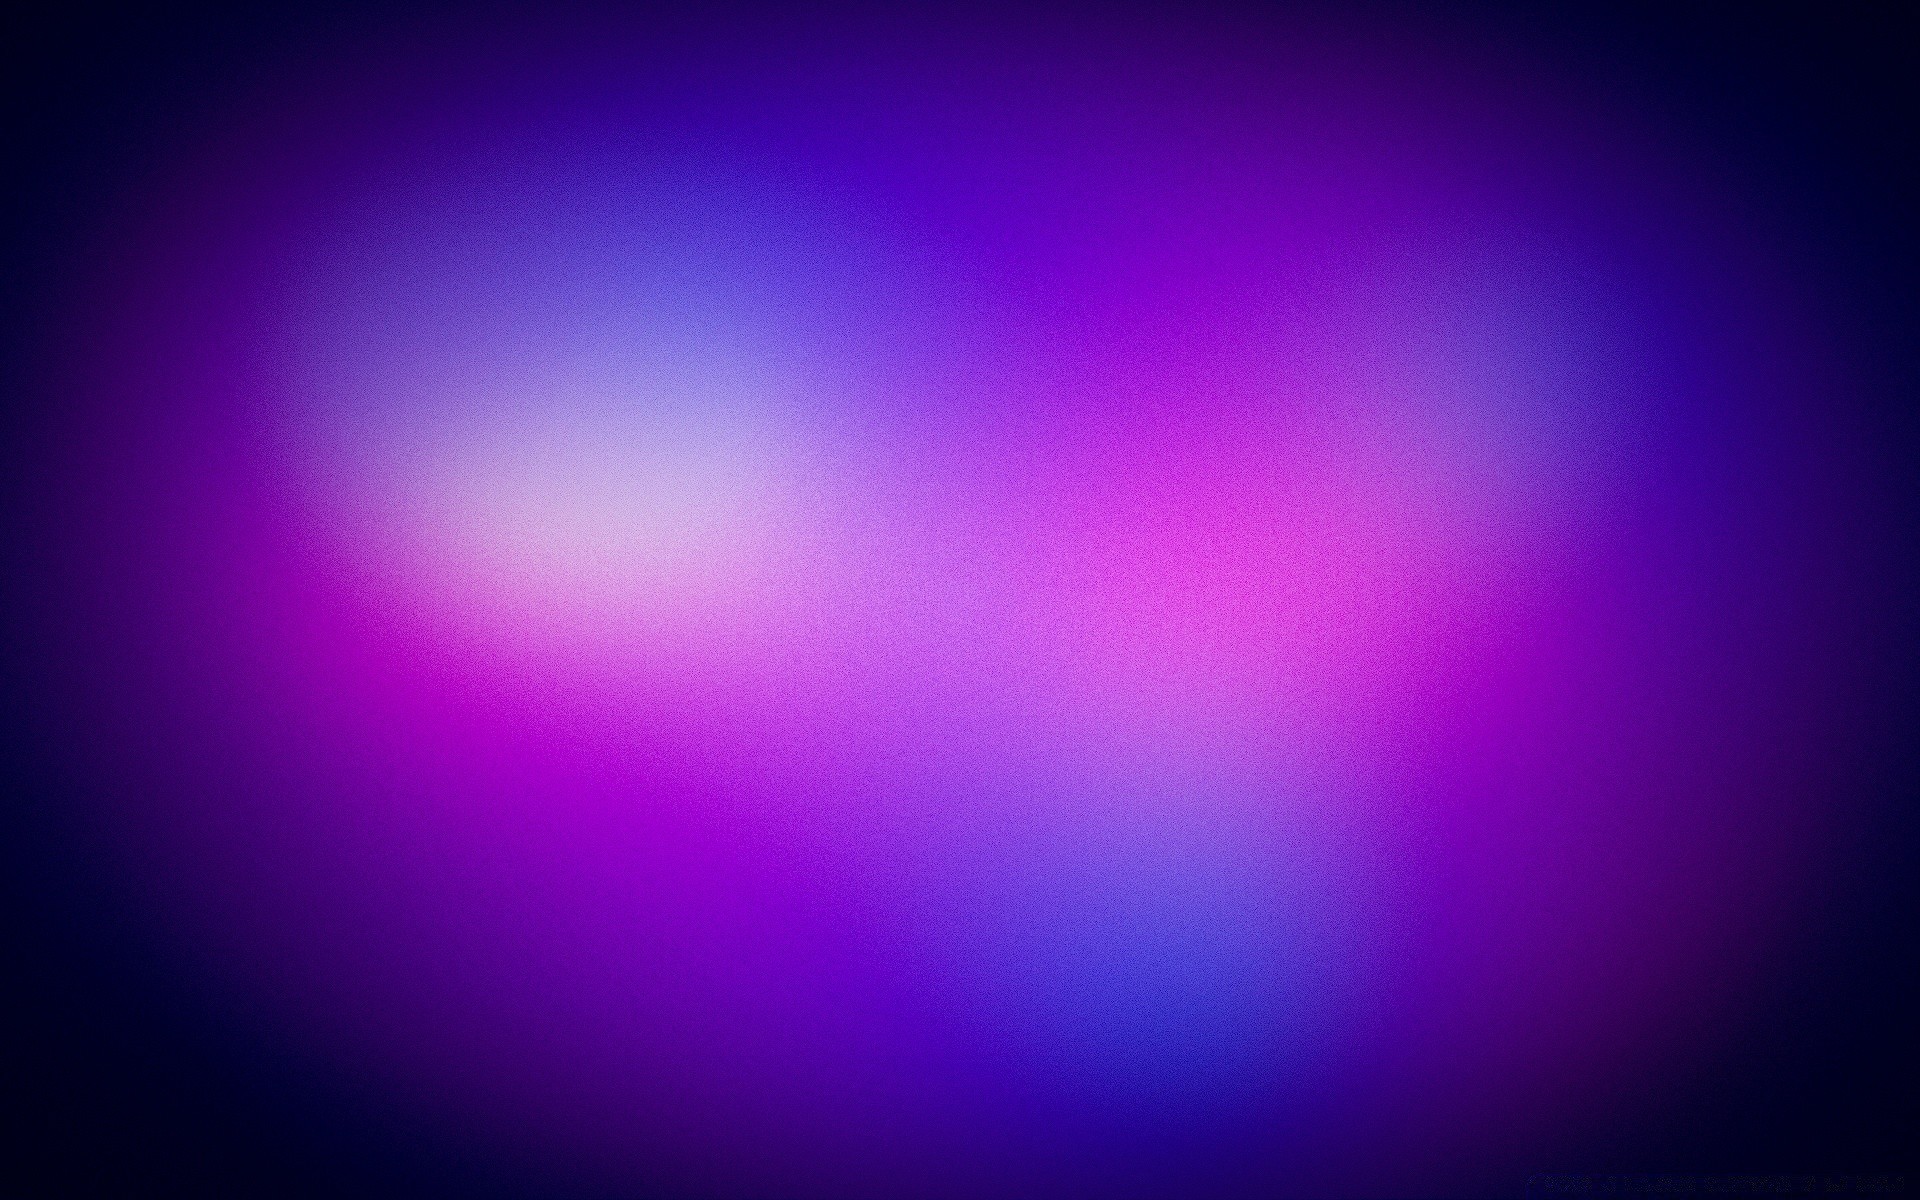 bright colors abstract light background blur wallpaper color graphic design art illustration violet desktop texture pattern element spectrum bright template futuristic luminescence